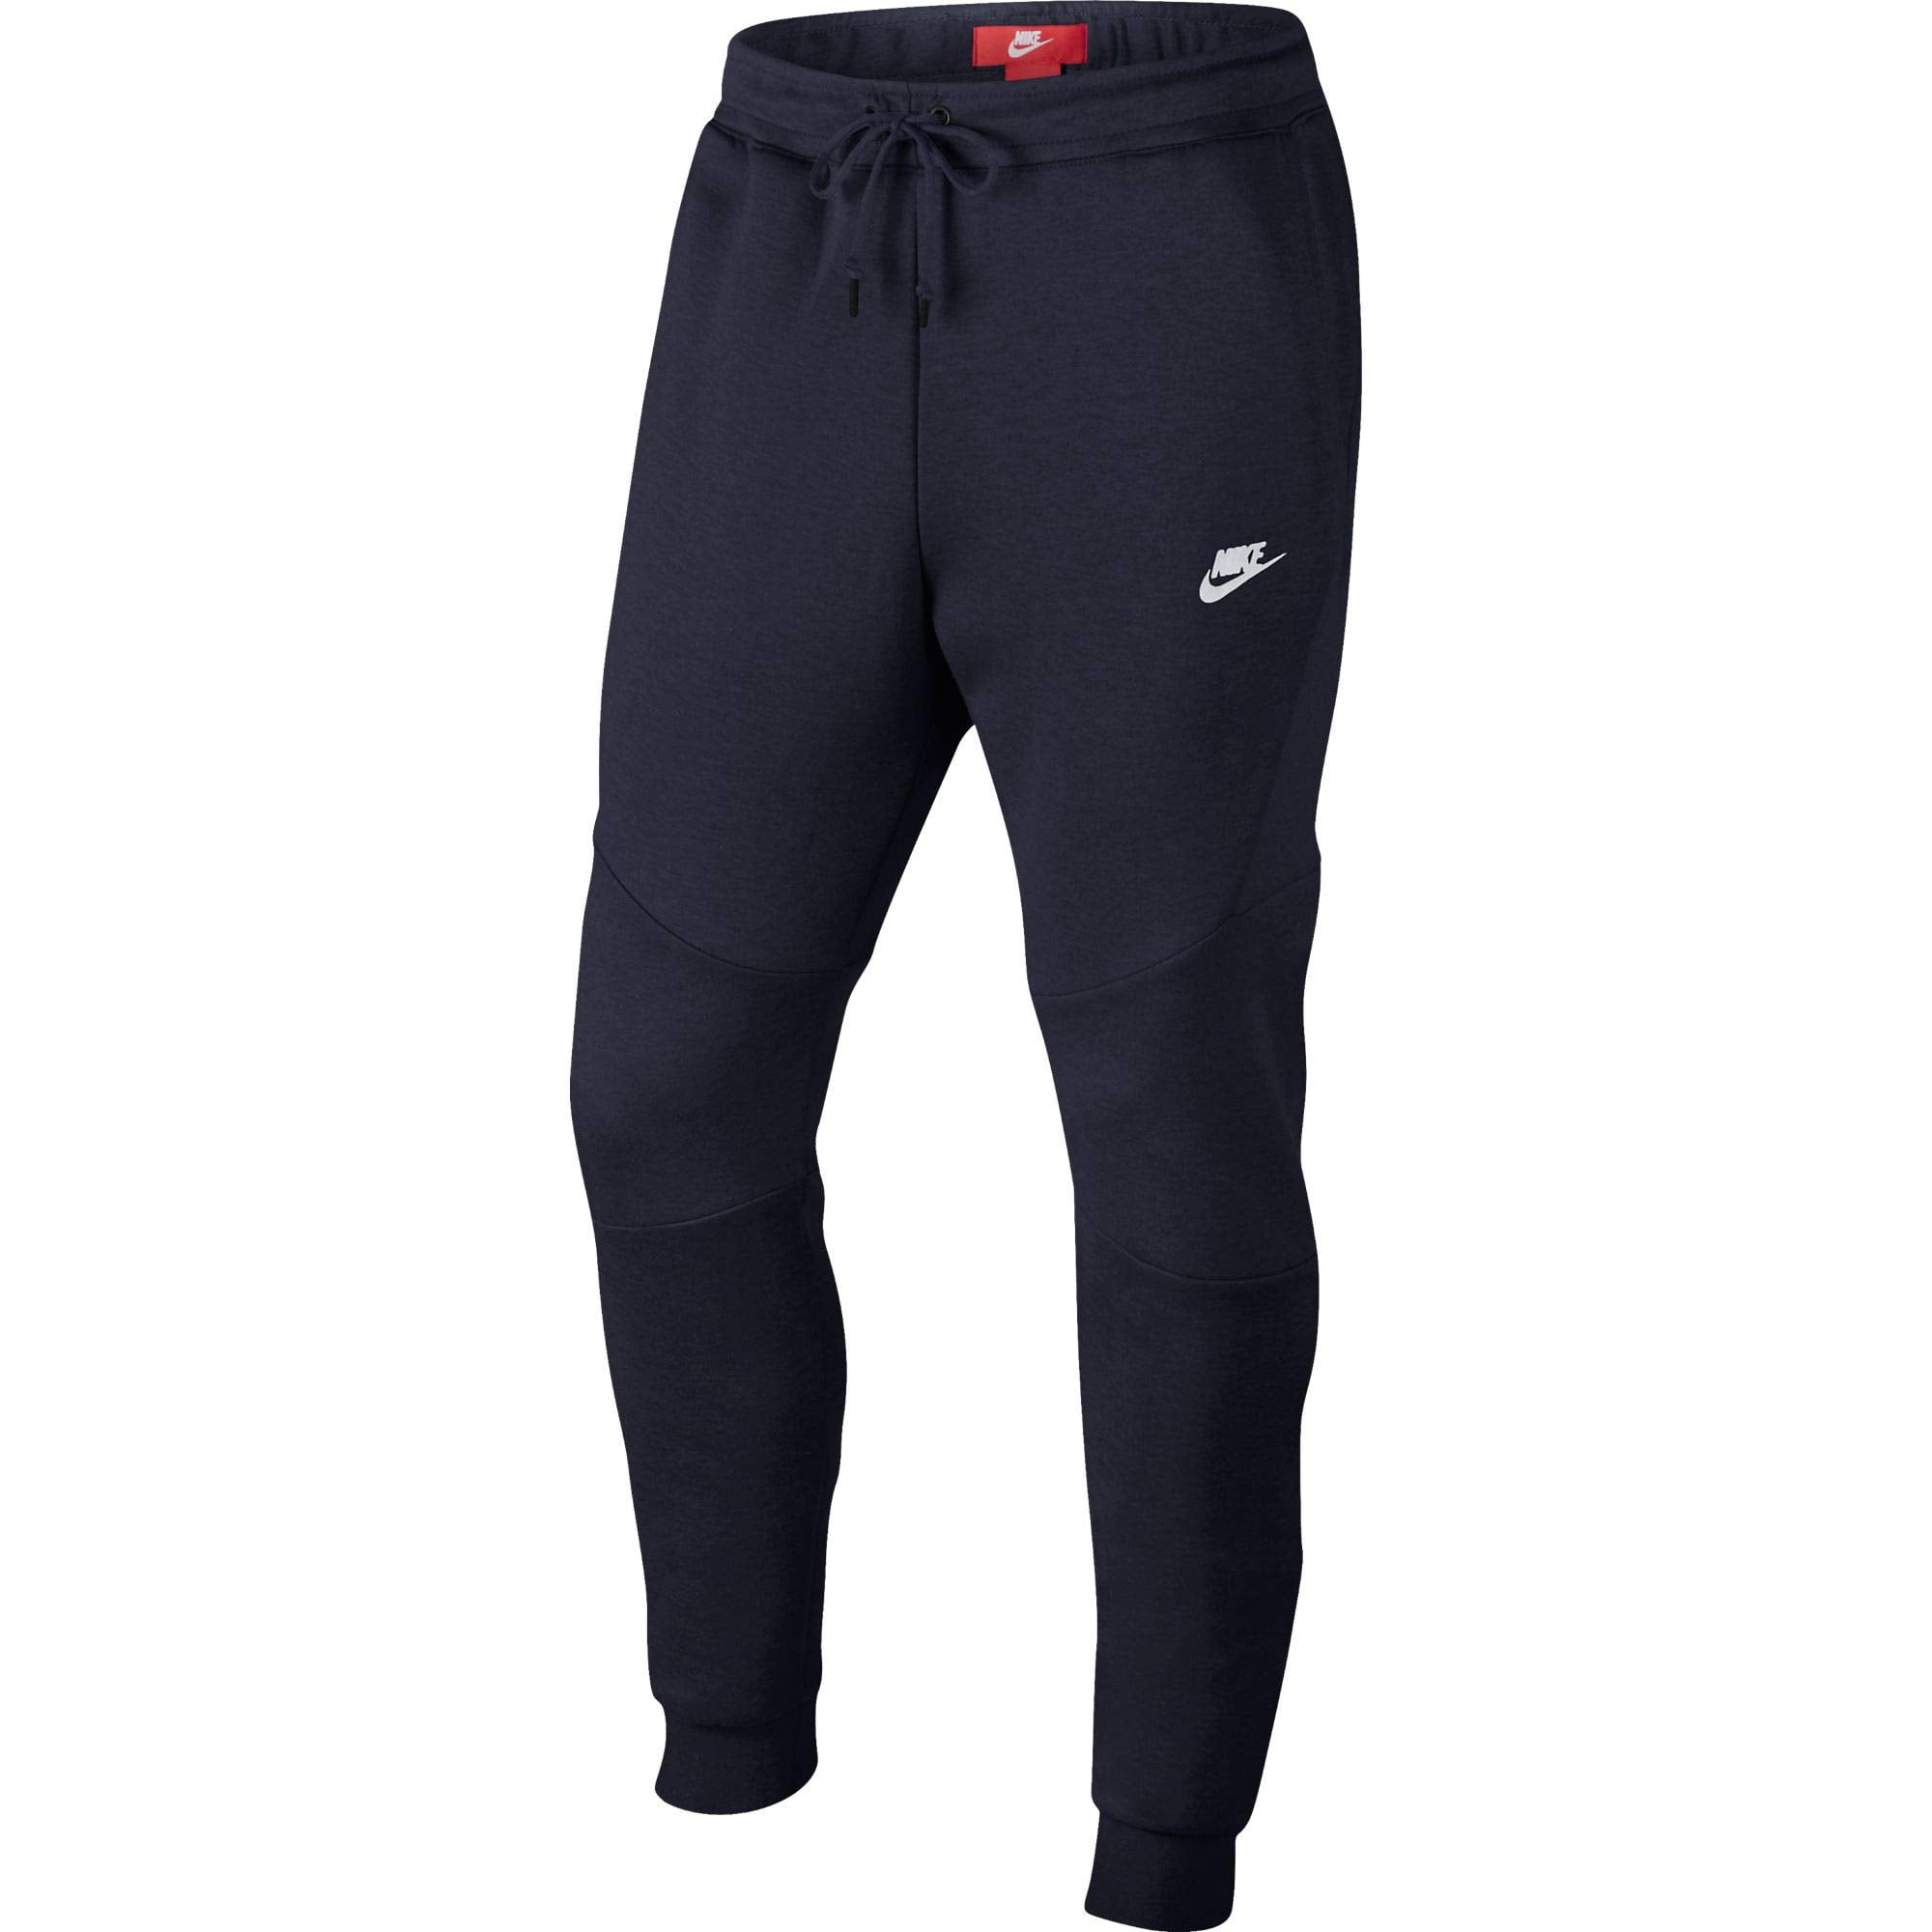 claridad Colaborar con Narabar Nike Tech Fleece Men's Sportswear Fashion Casual Joggers Blue 805162-455 -  Walmart.com